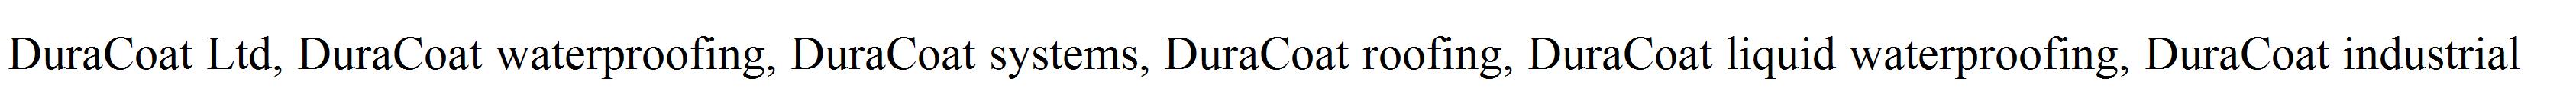 DuraCoat Ltd, DuraCoat waterproofing, DuraCoat systems, DuraCoat roofing, DuraCoat liquid waterproofing, DuraCoat industrial